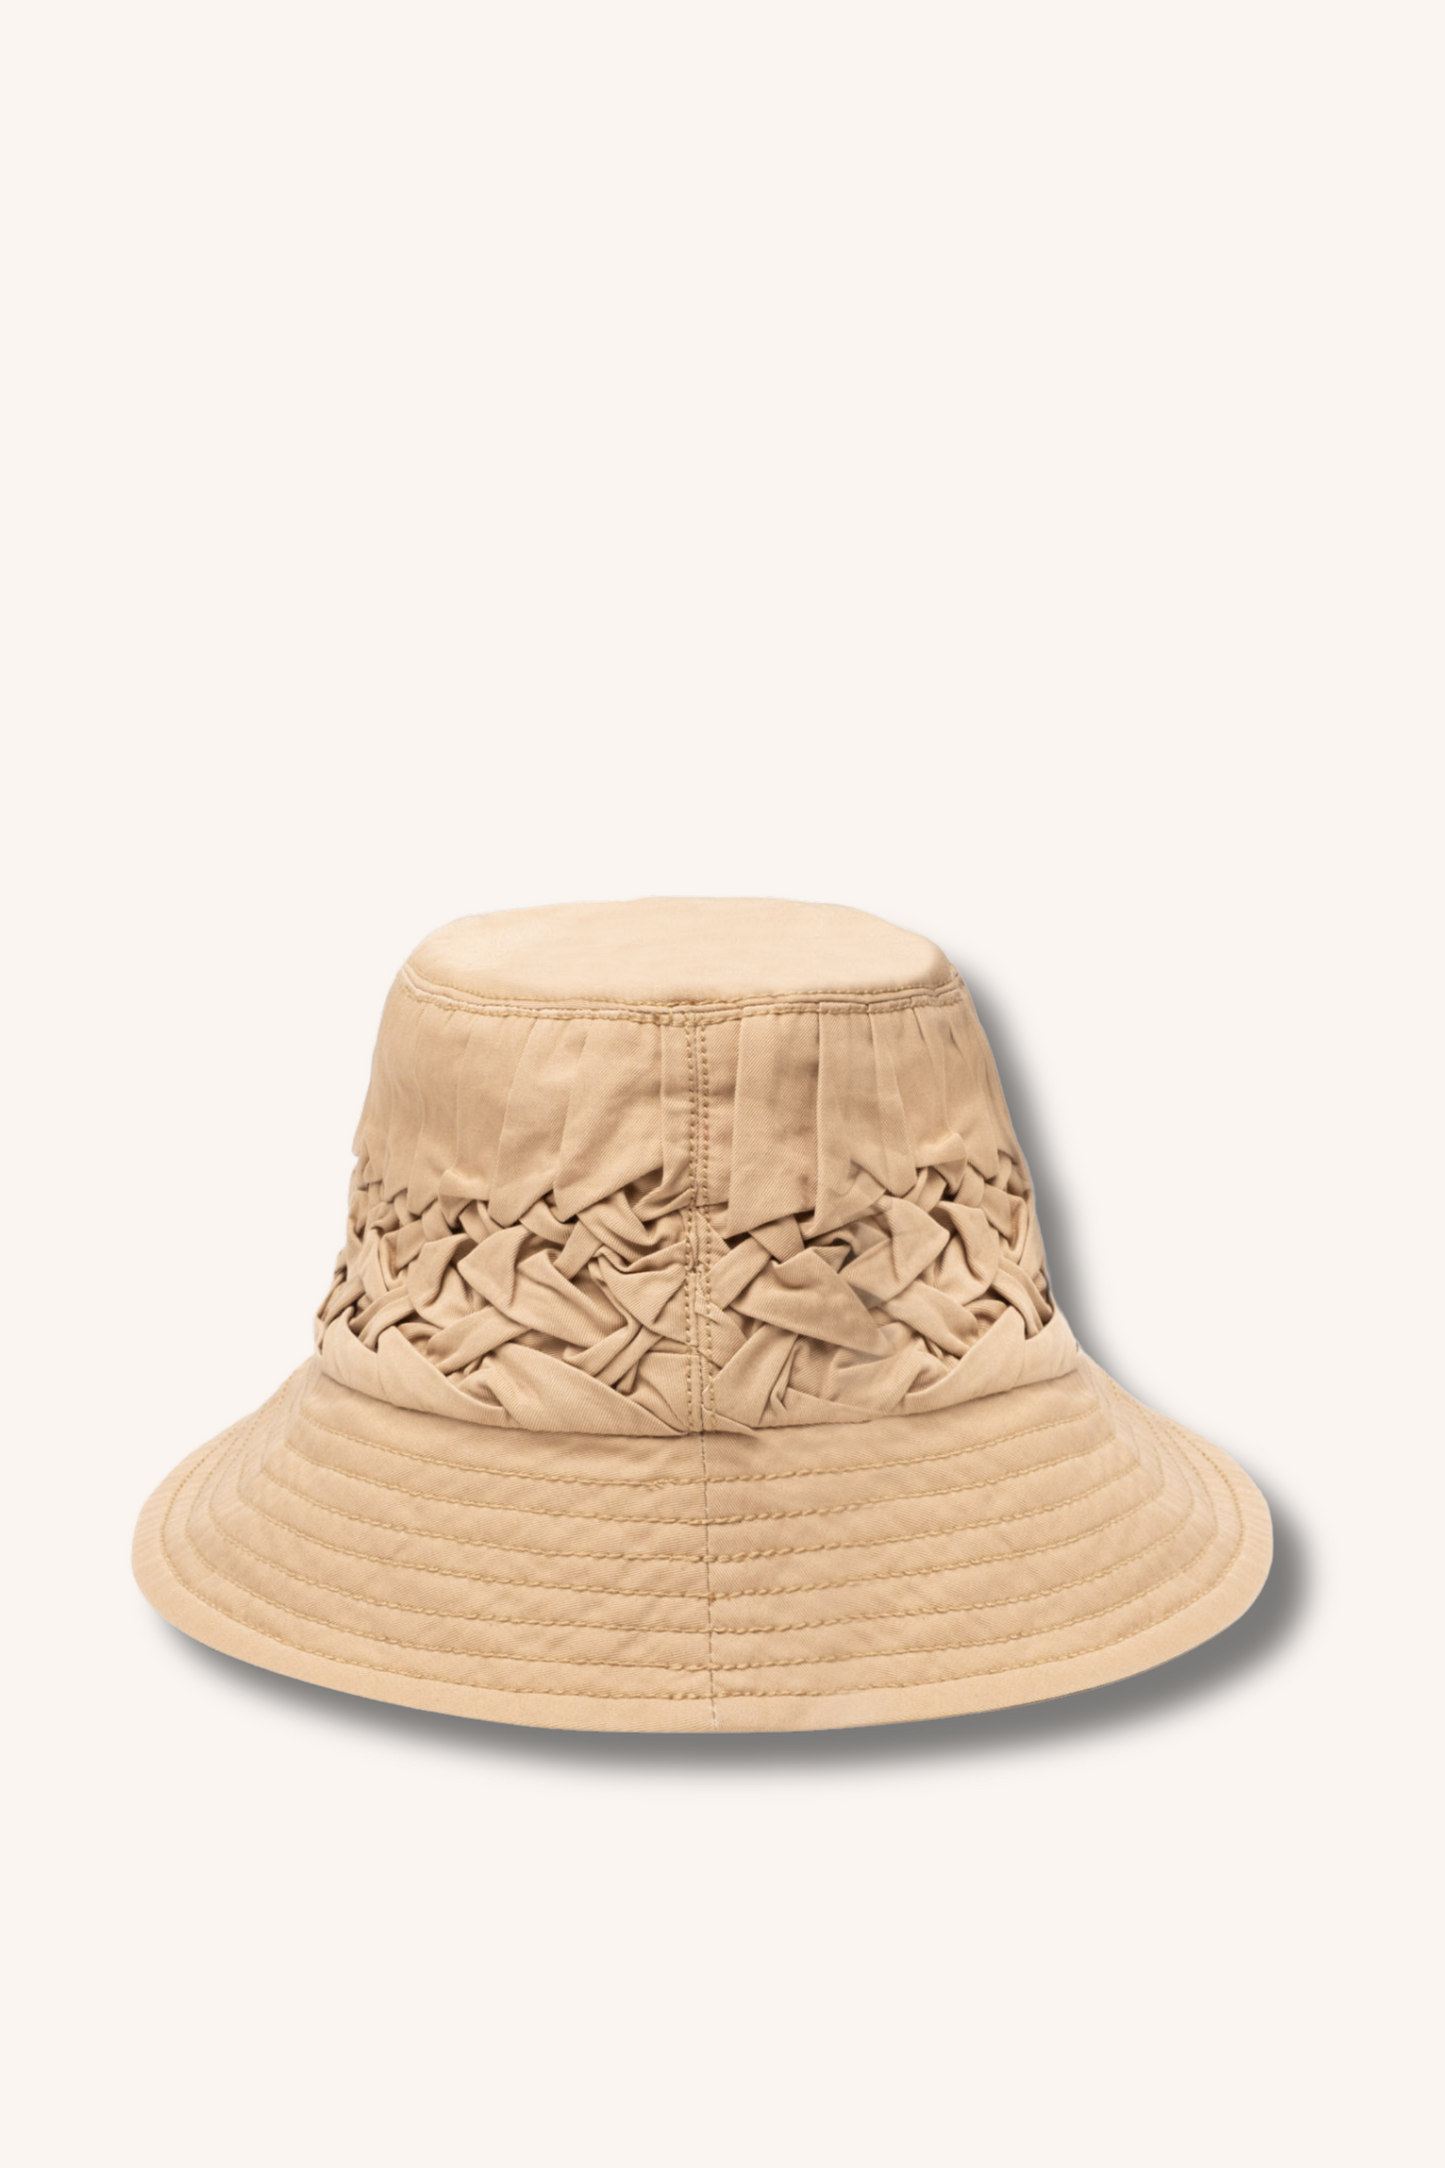 Marbella Hat in Driftwood